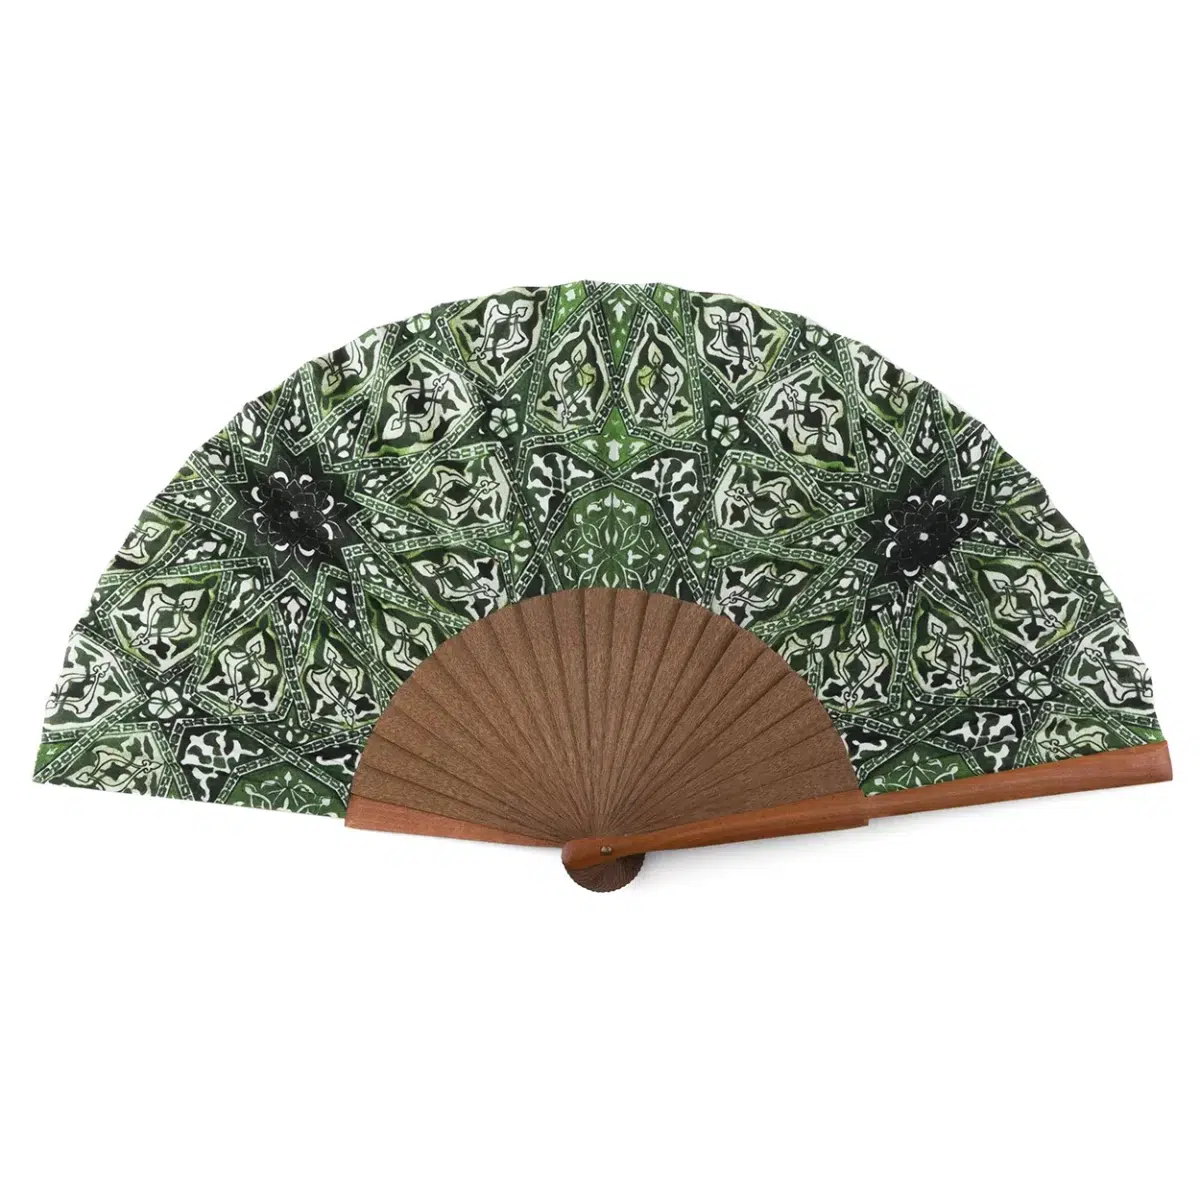 Green Silk Fan with Print Inspired by Islamic Geometry